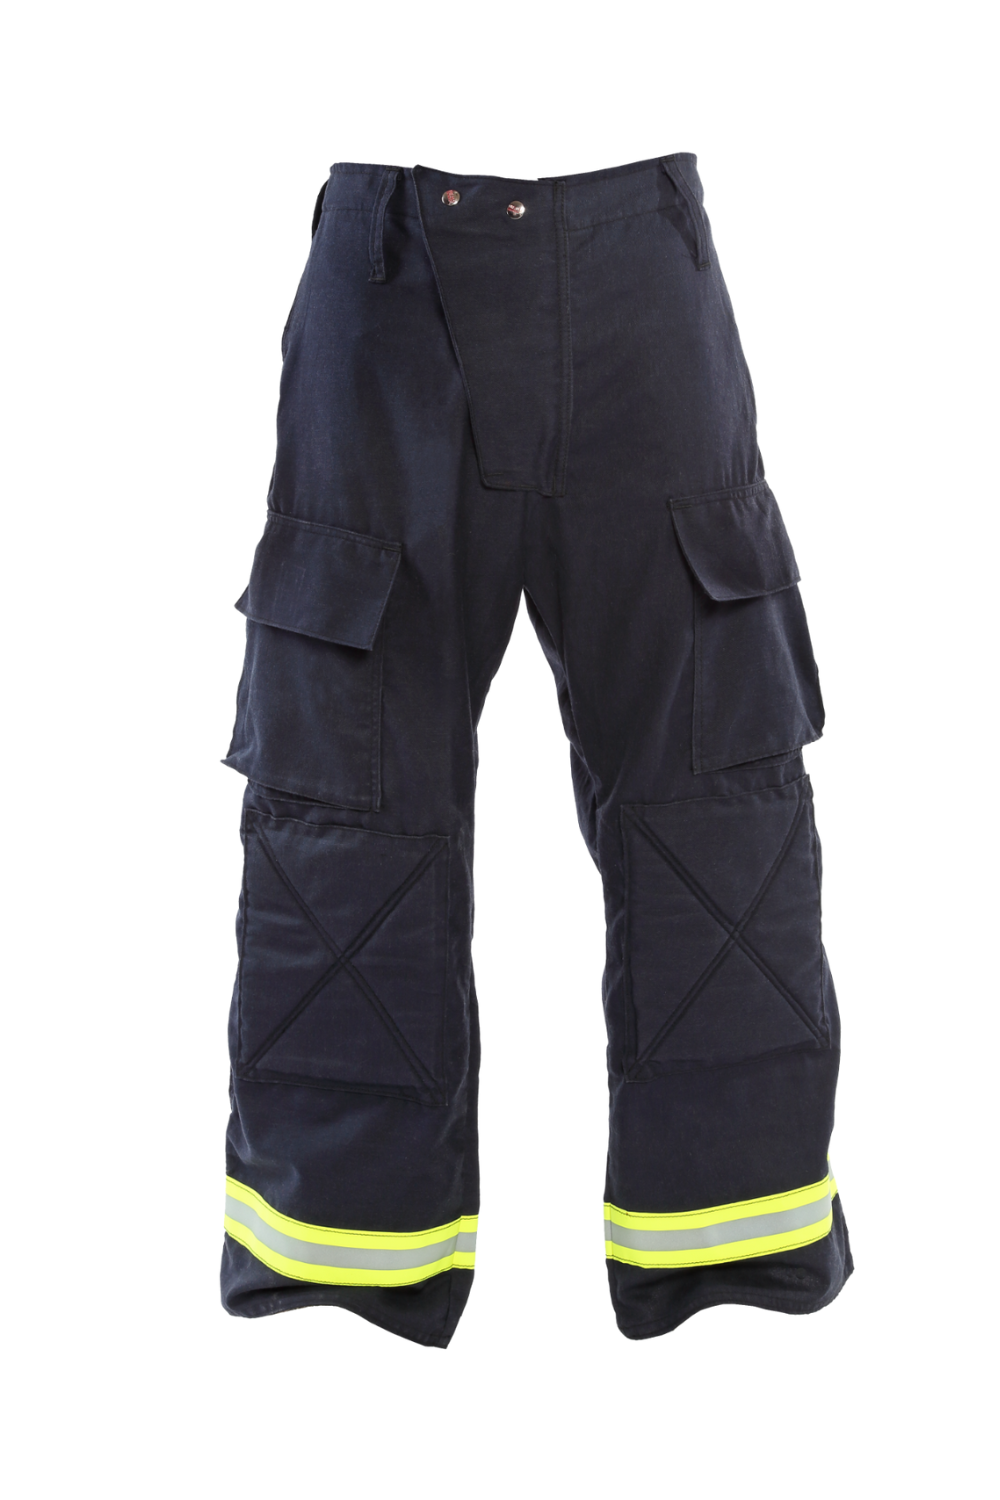 FIREDEX EMS Pants - Nomex